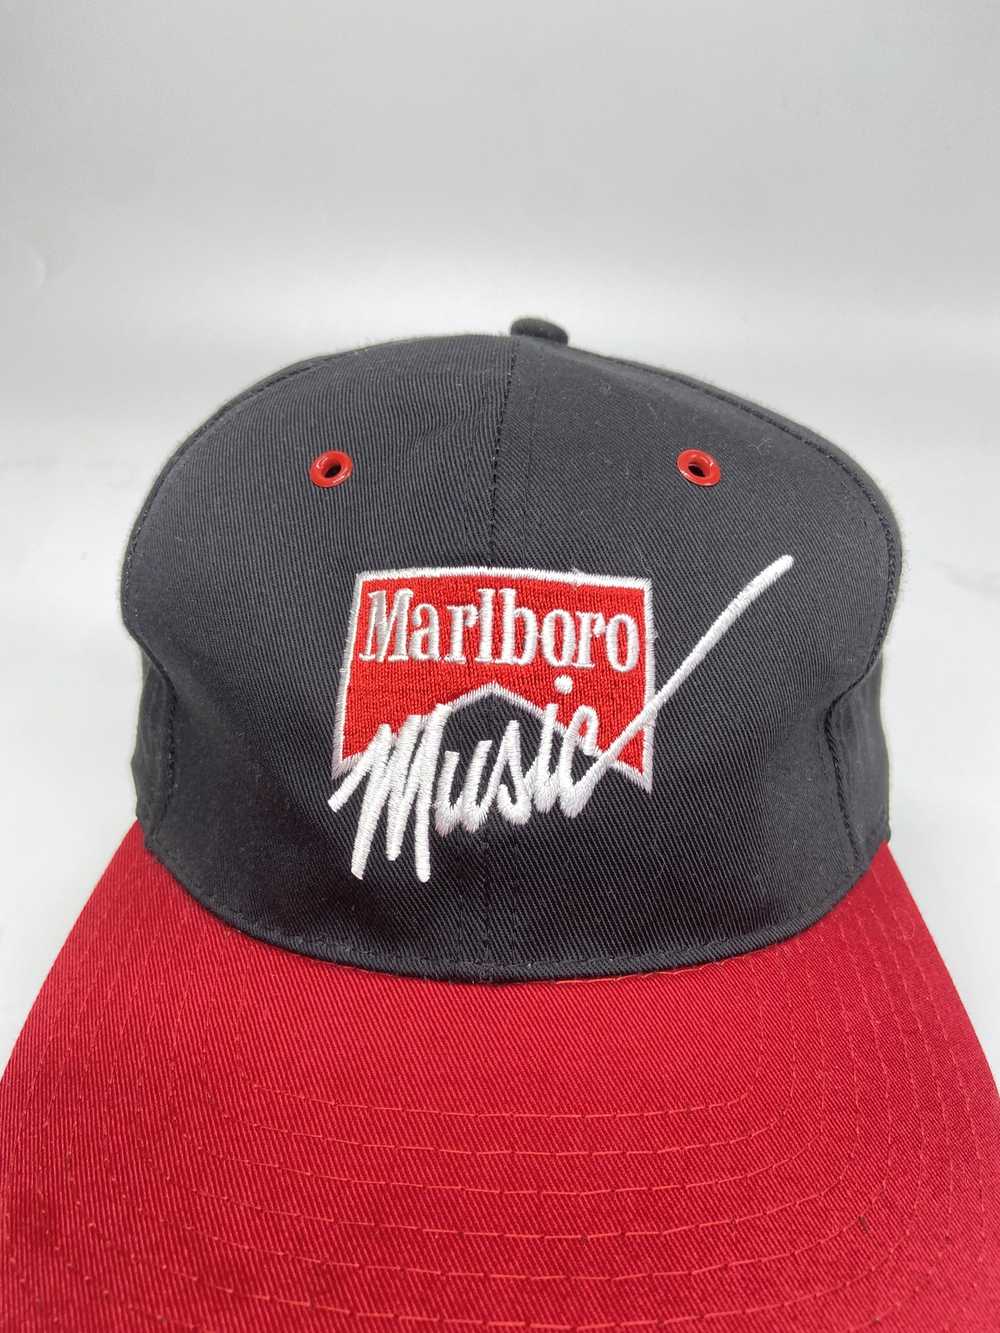 Marlboro Marlboro Hat - image 2